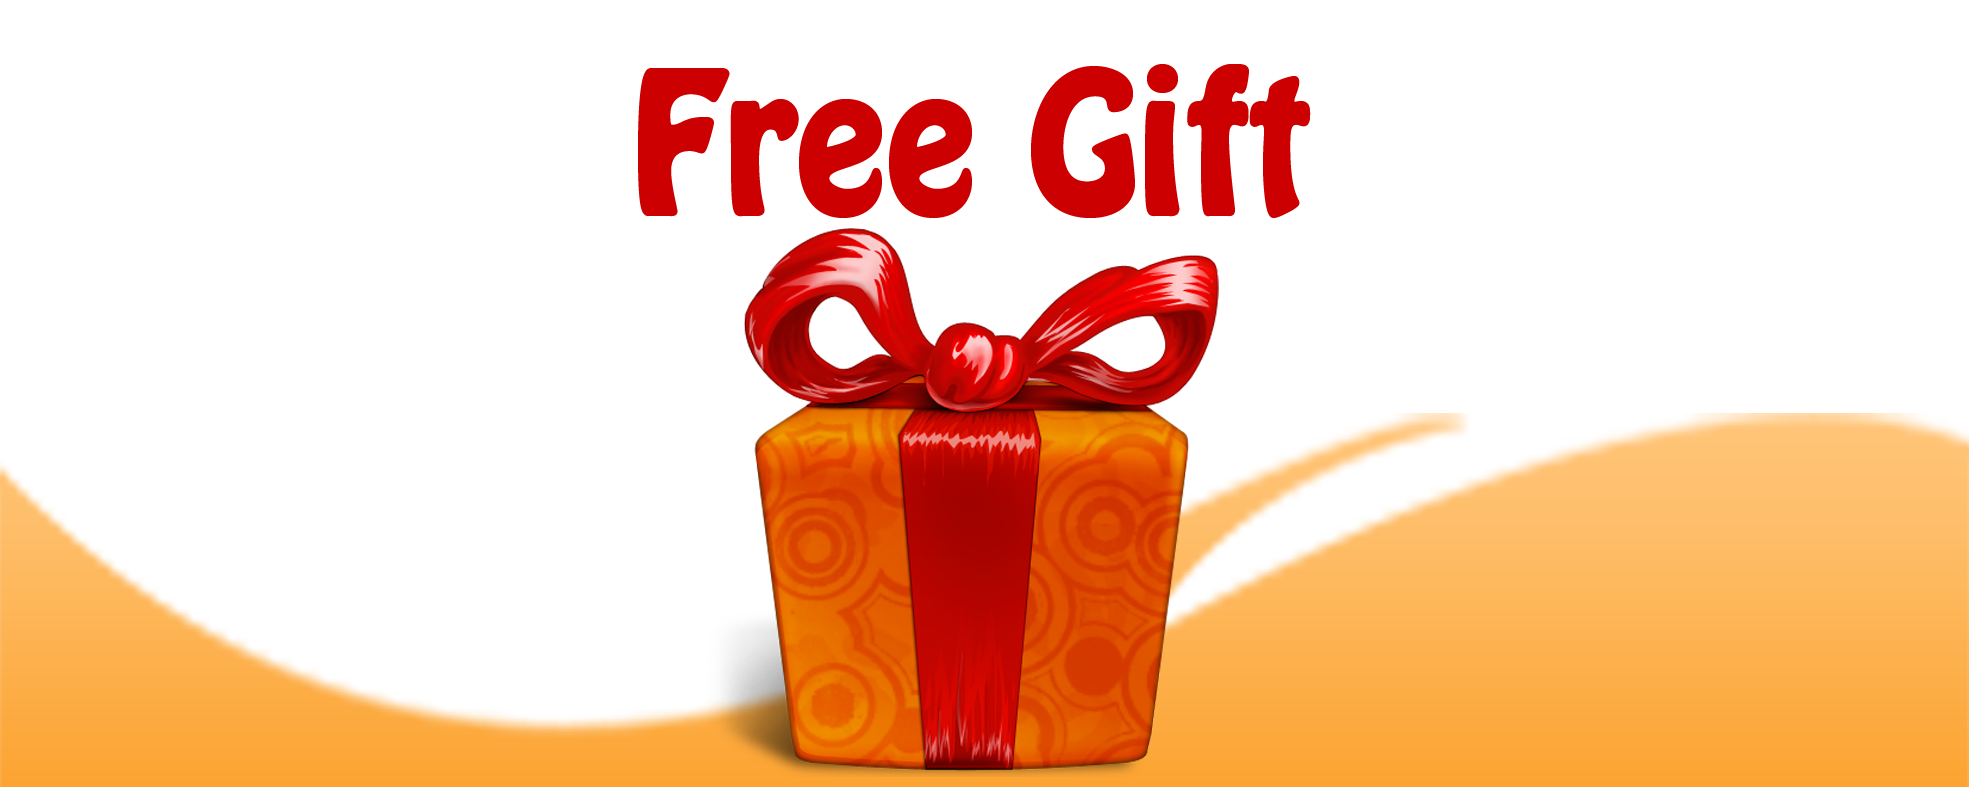 1,000+ Free Gift Card & Christmas Images - Pixabay